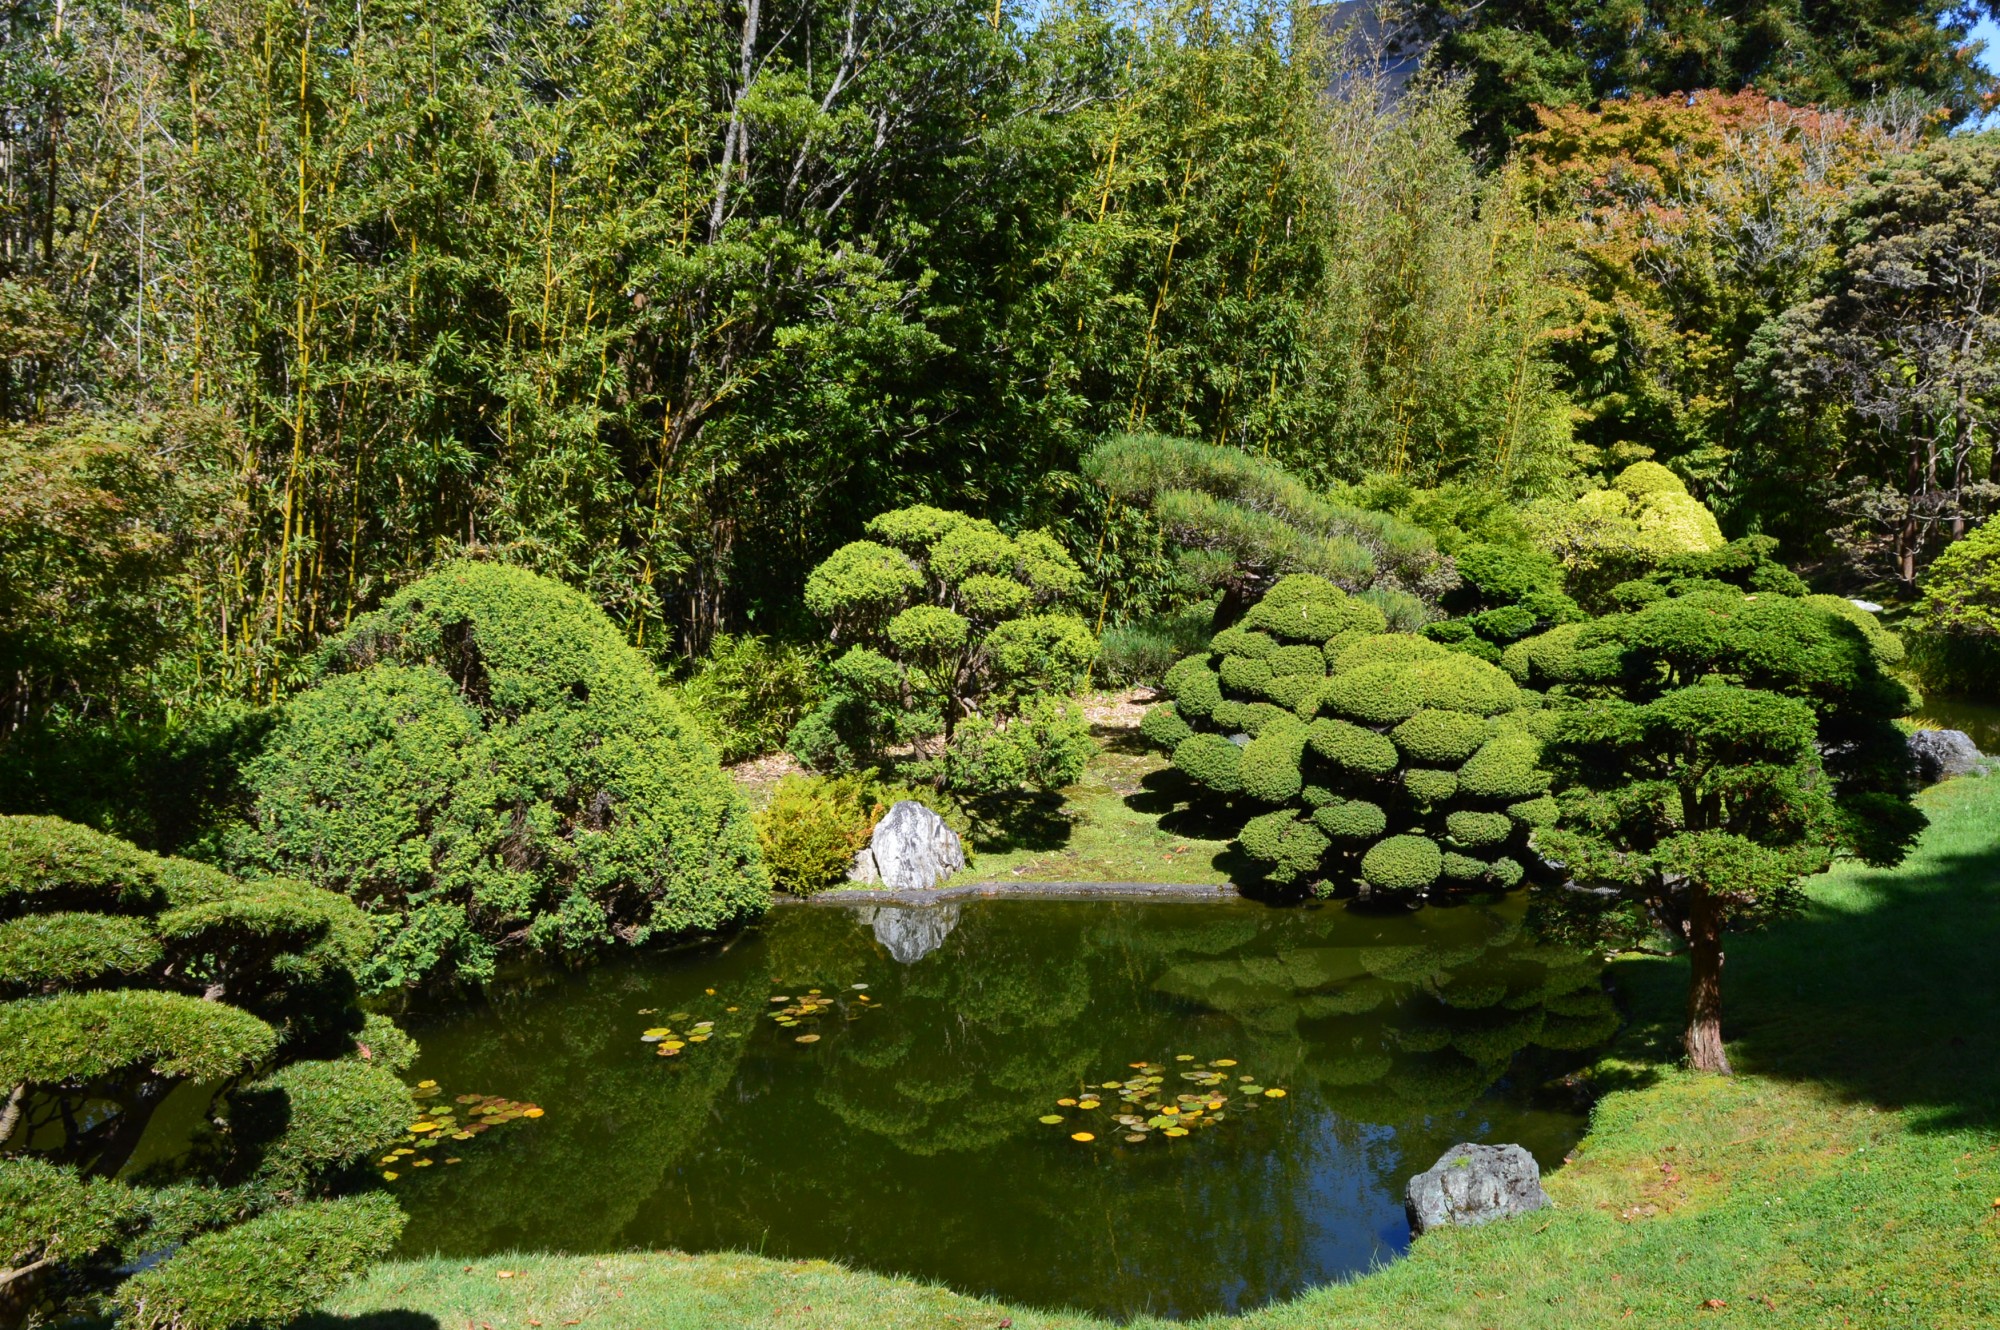 Japanese Garden in the Golden Gate Park, San Francisco